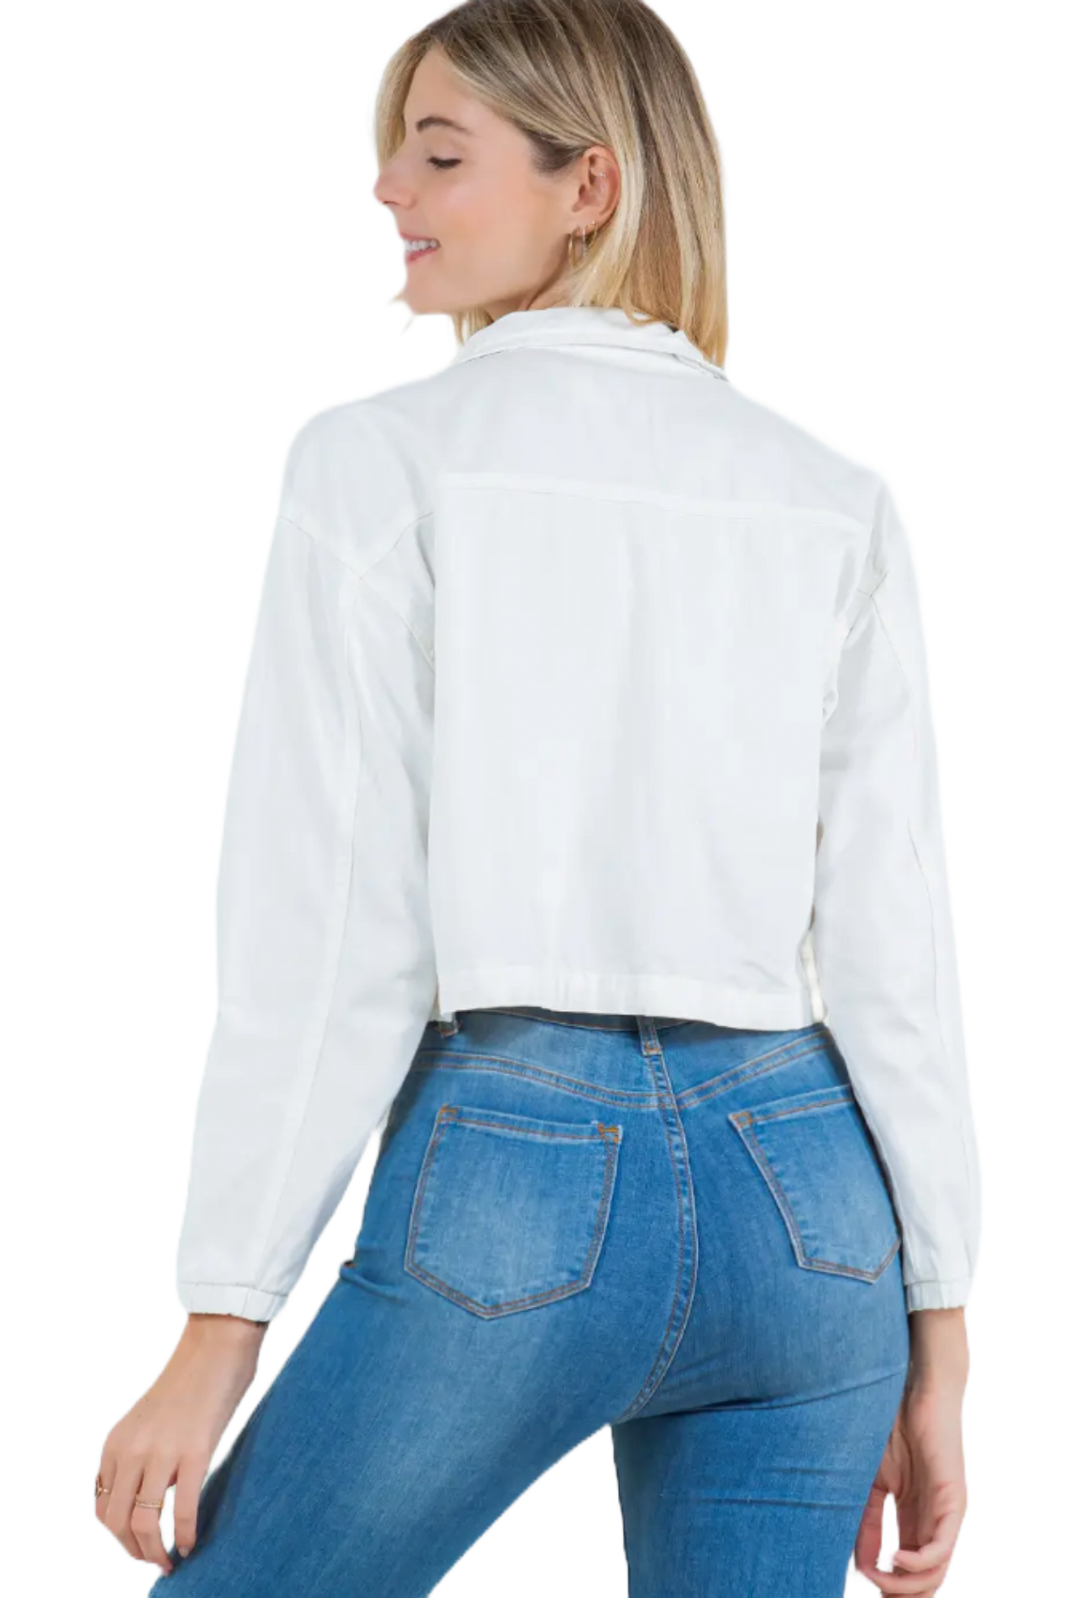 The Pippa Jacket- White